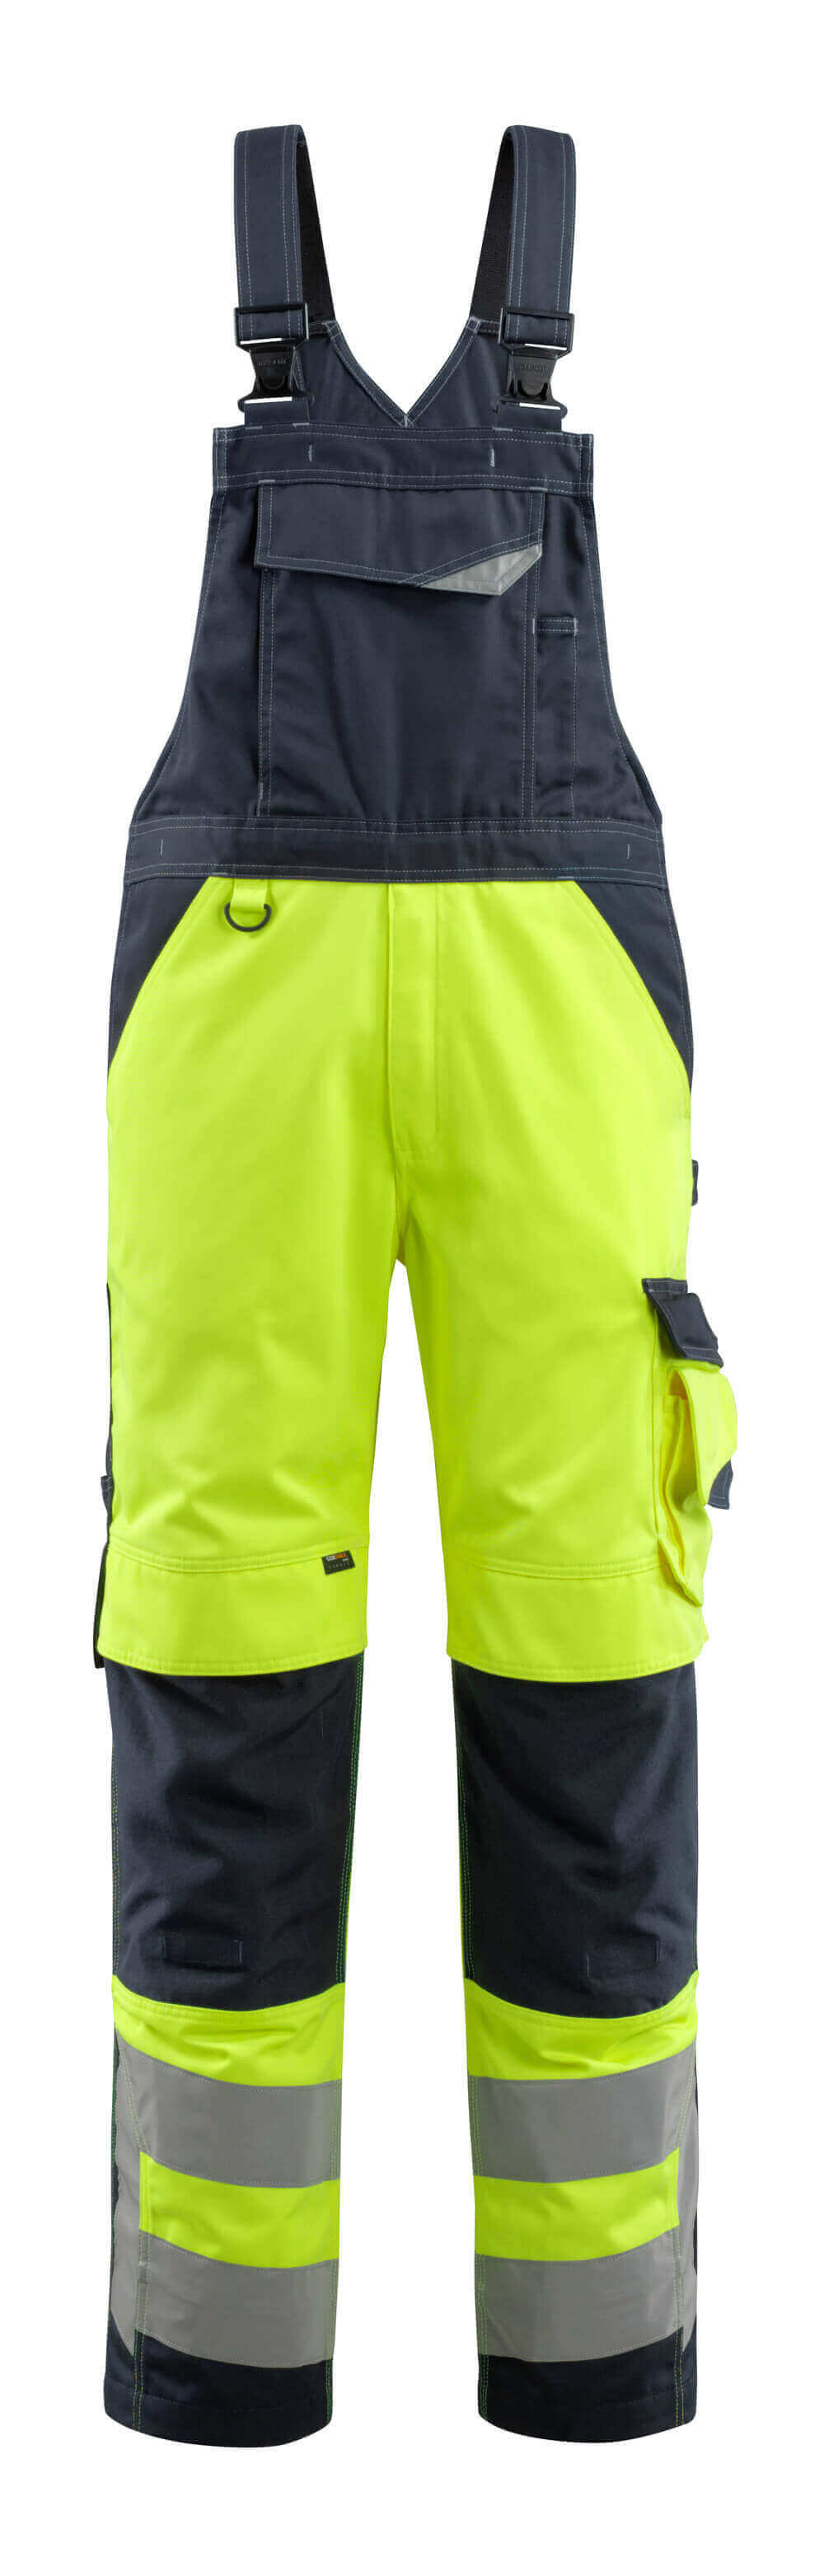 Mascot SAFE SUPREME  Newcastle Bib & Brace with kneepad pockets 15569 hi-vis yellow/dark navy